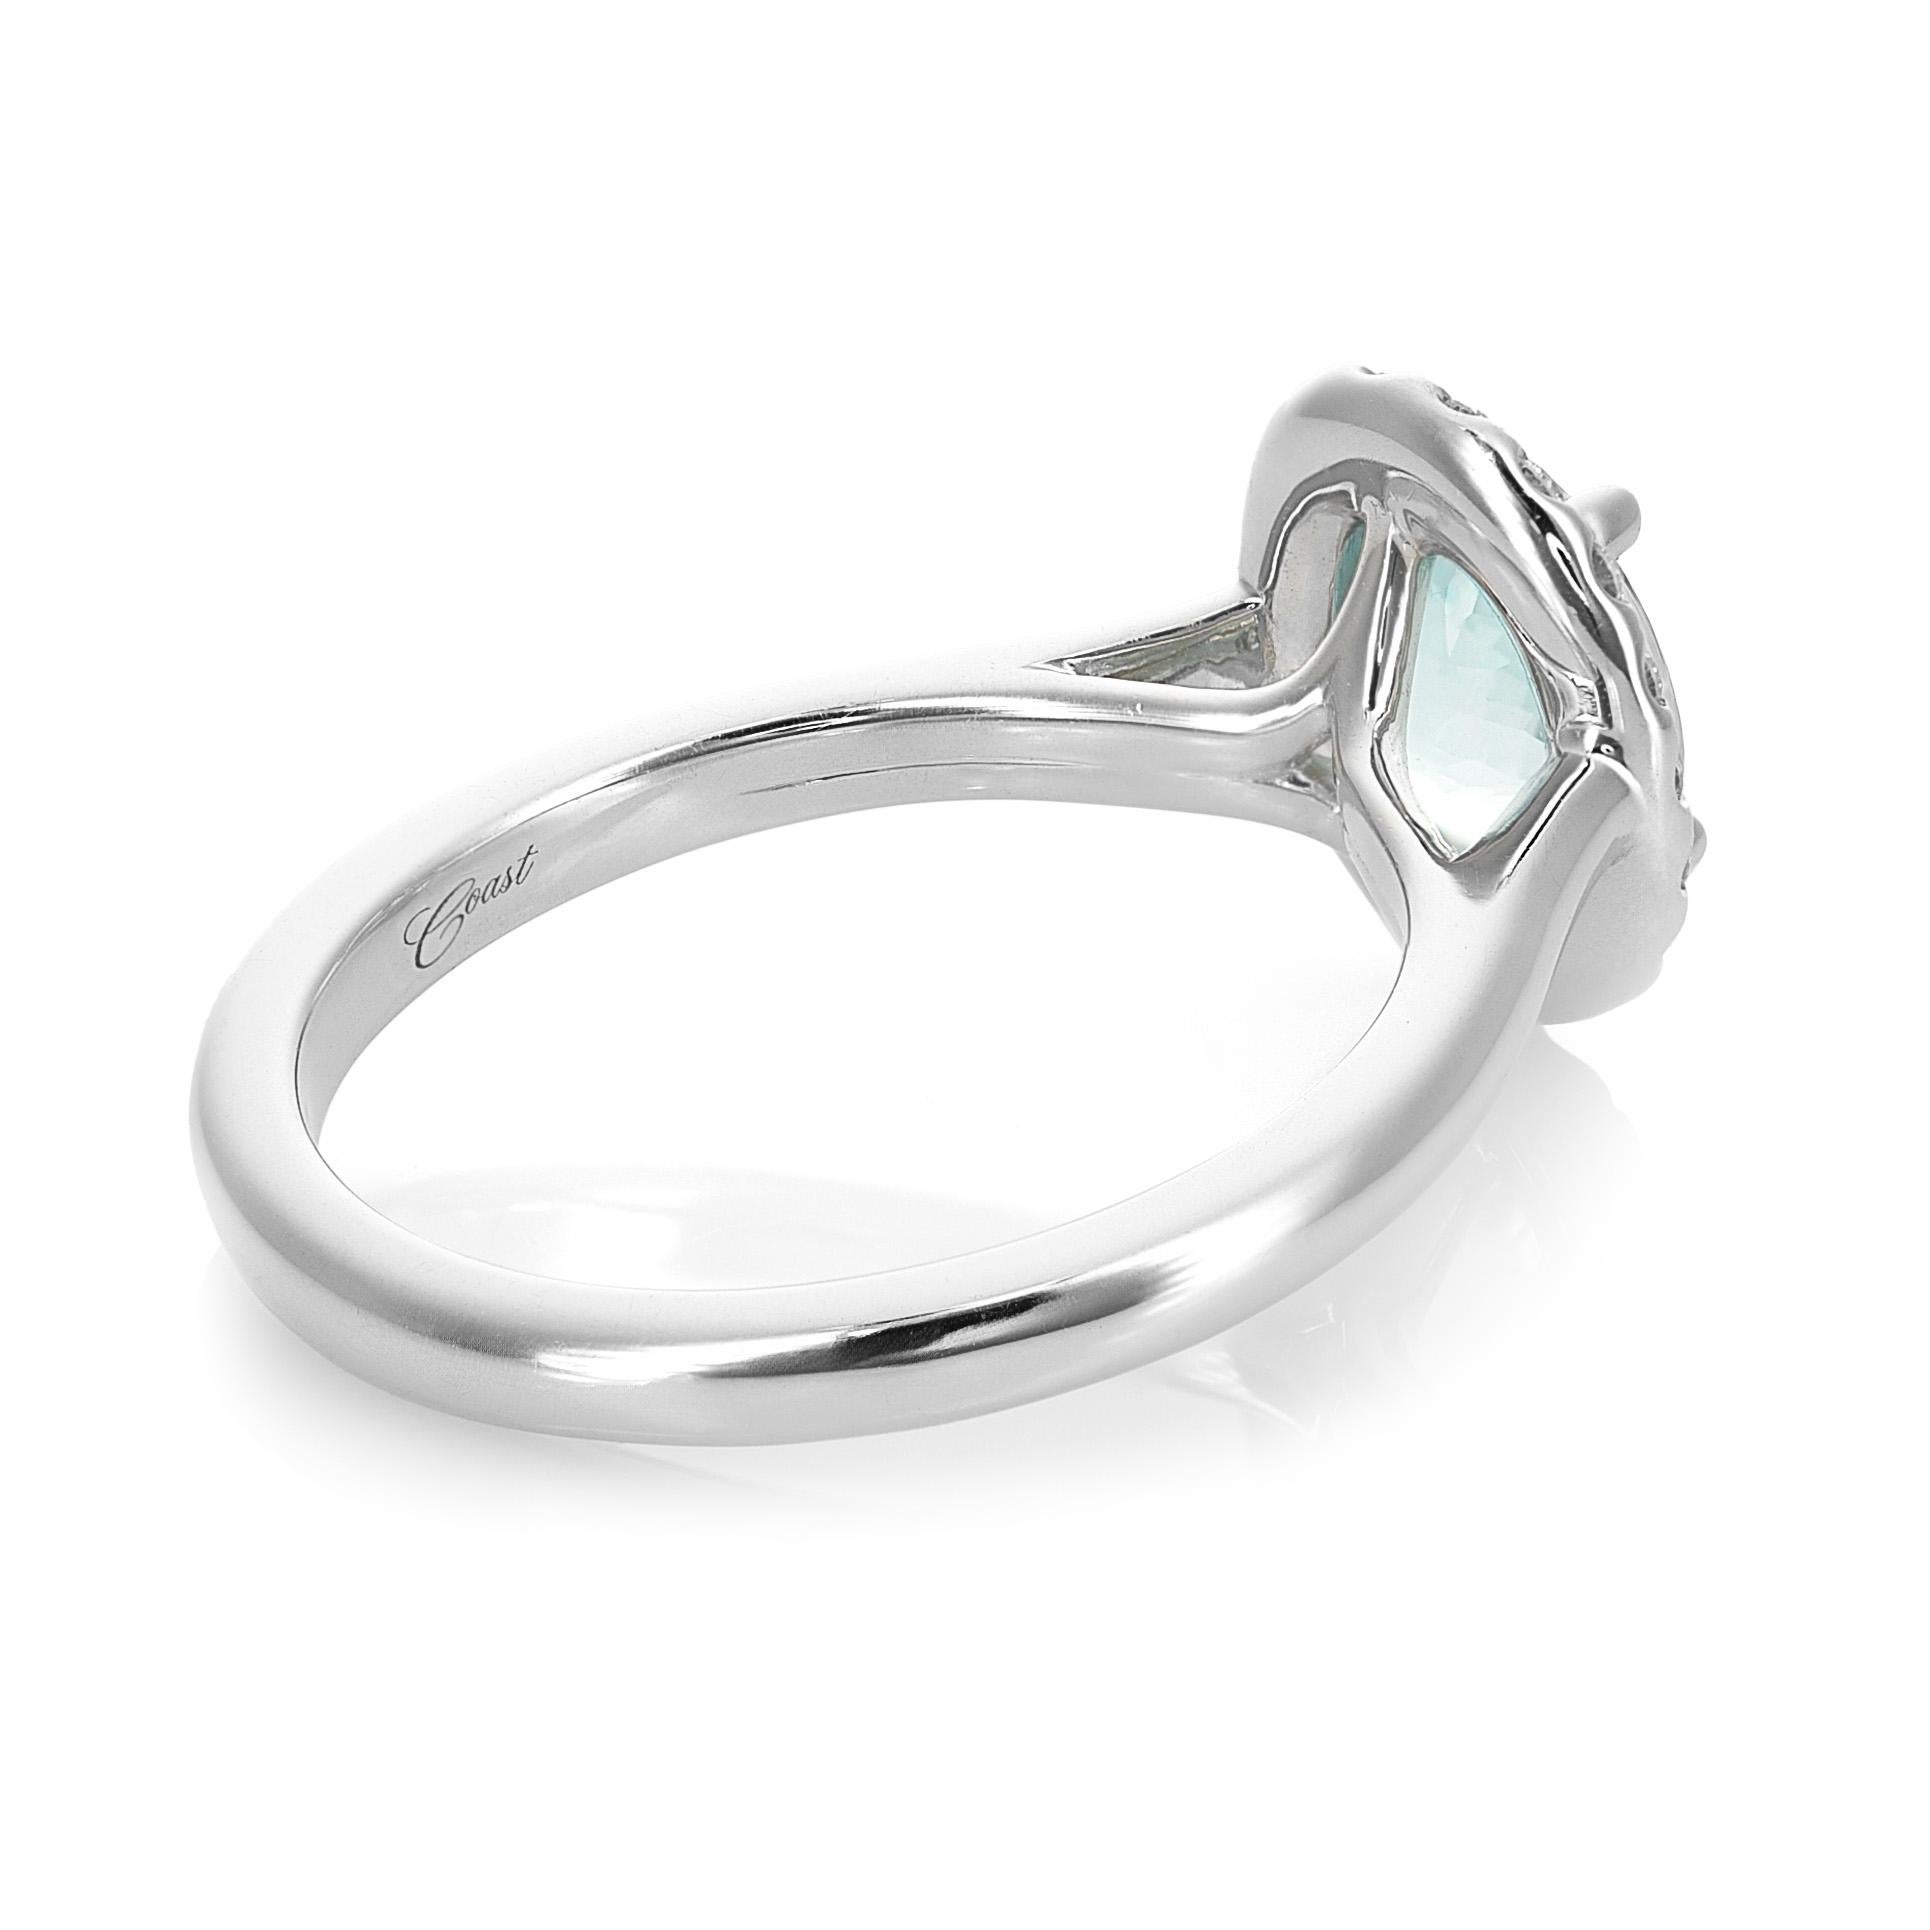 Mixed Cut 1.29 Carats Paraiba Tourmaline Diamonds set in 14K White Gold Ring For Sale